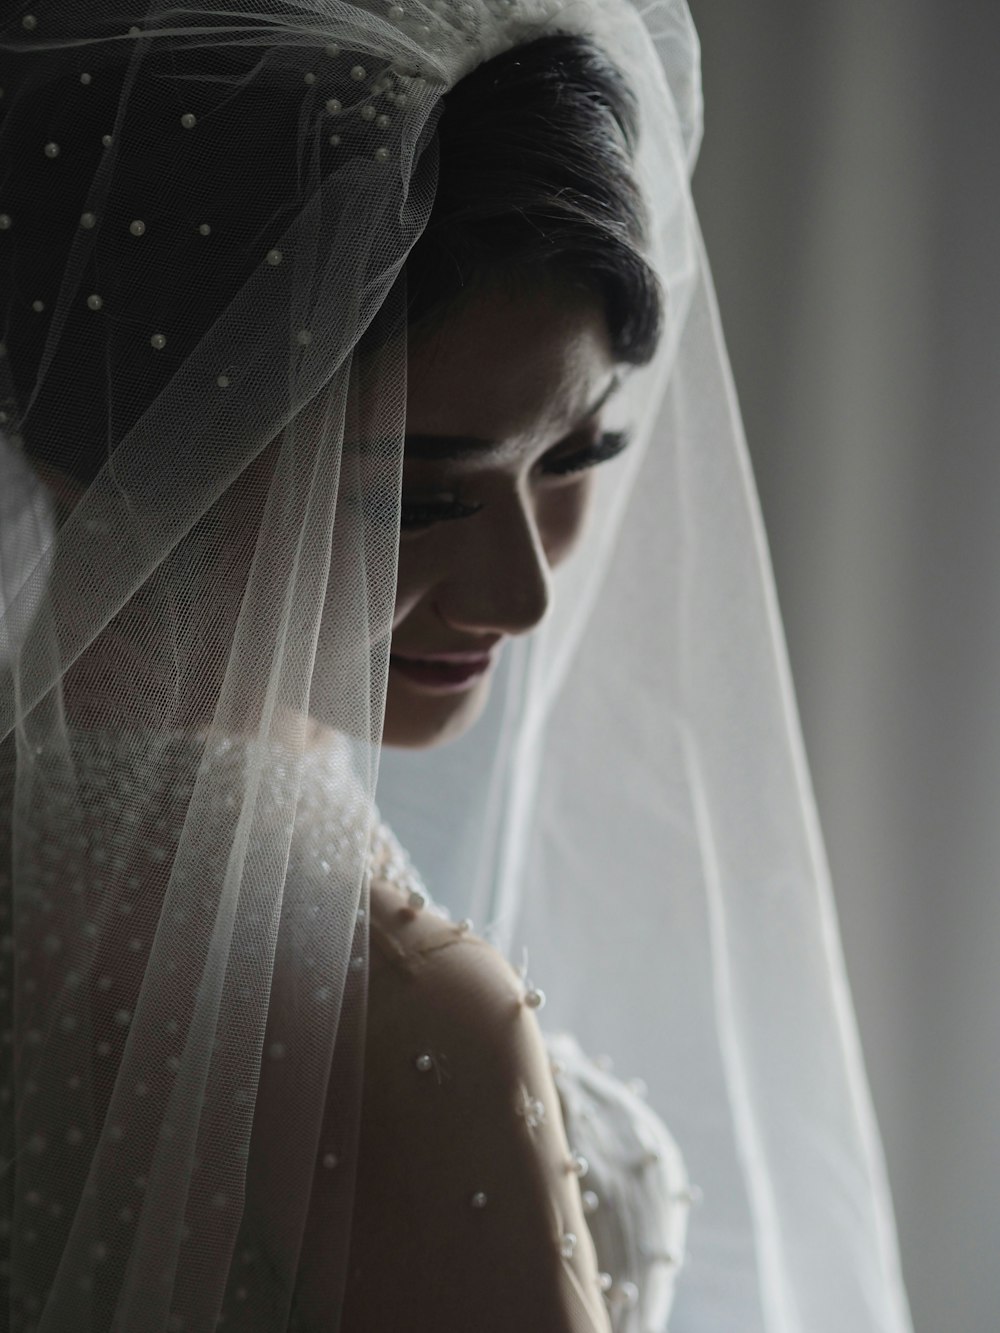 woman wearing white sheer wedding dress standing inside room